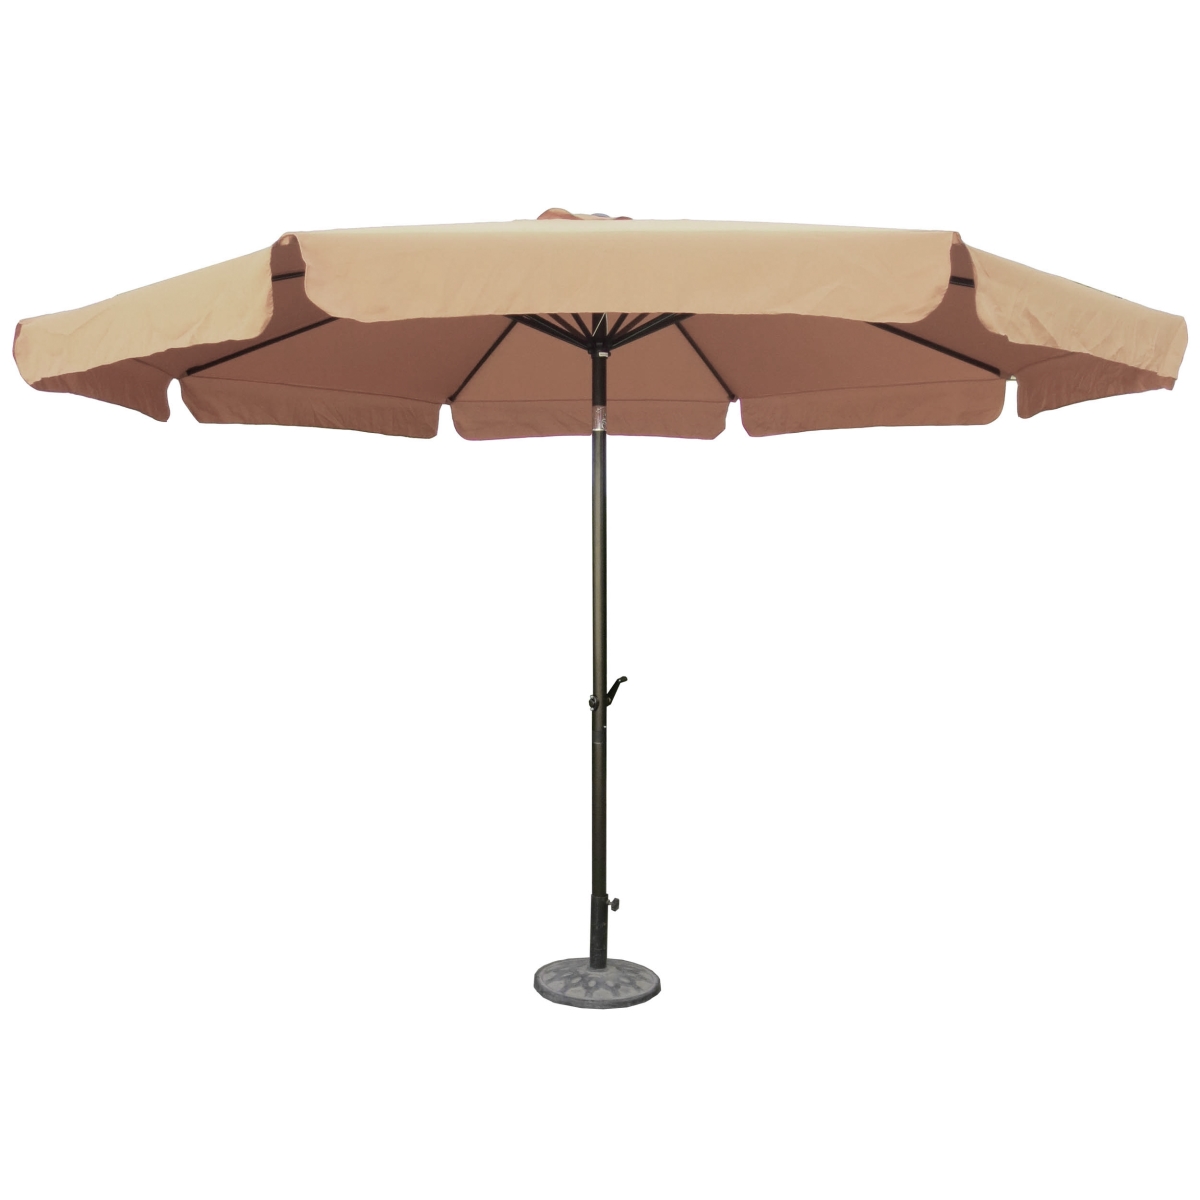 Yf-1104-3.5m-kh 12 Ft. Outdoor Aluminum Umbrella With Flaps, Khaki